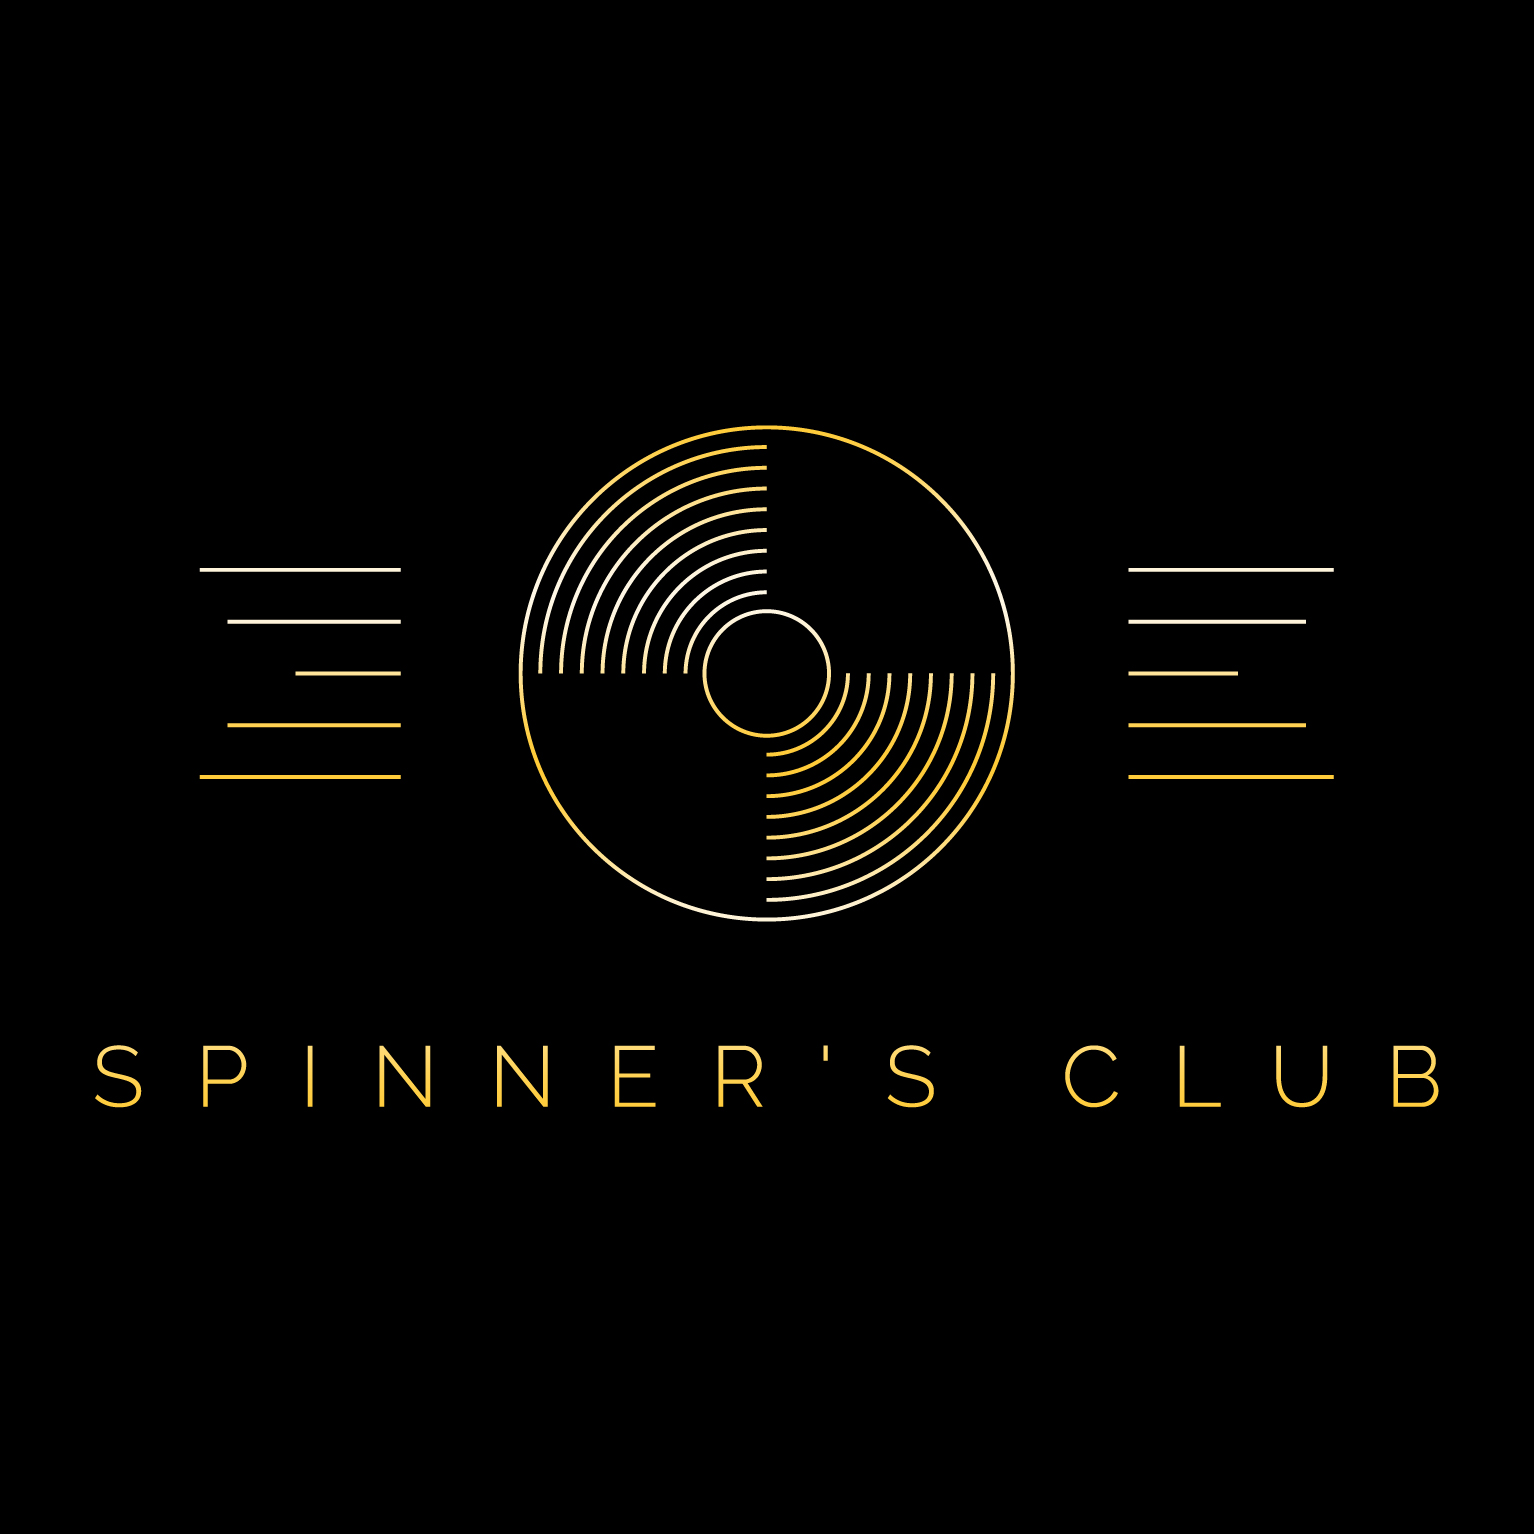 Show artwork for Spinner's Club